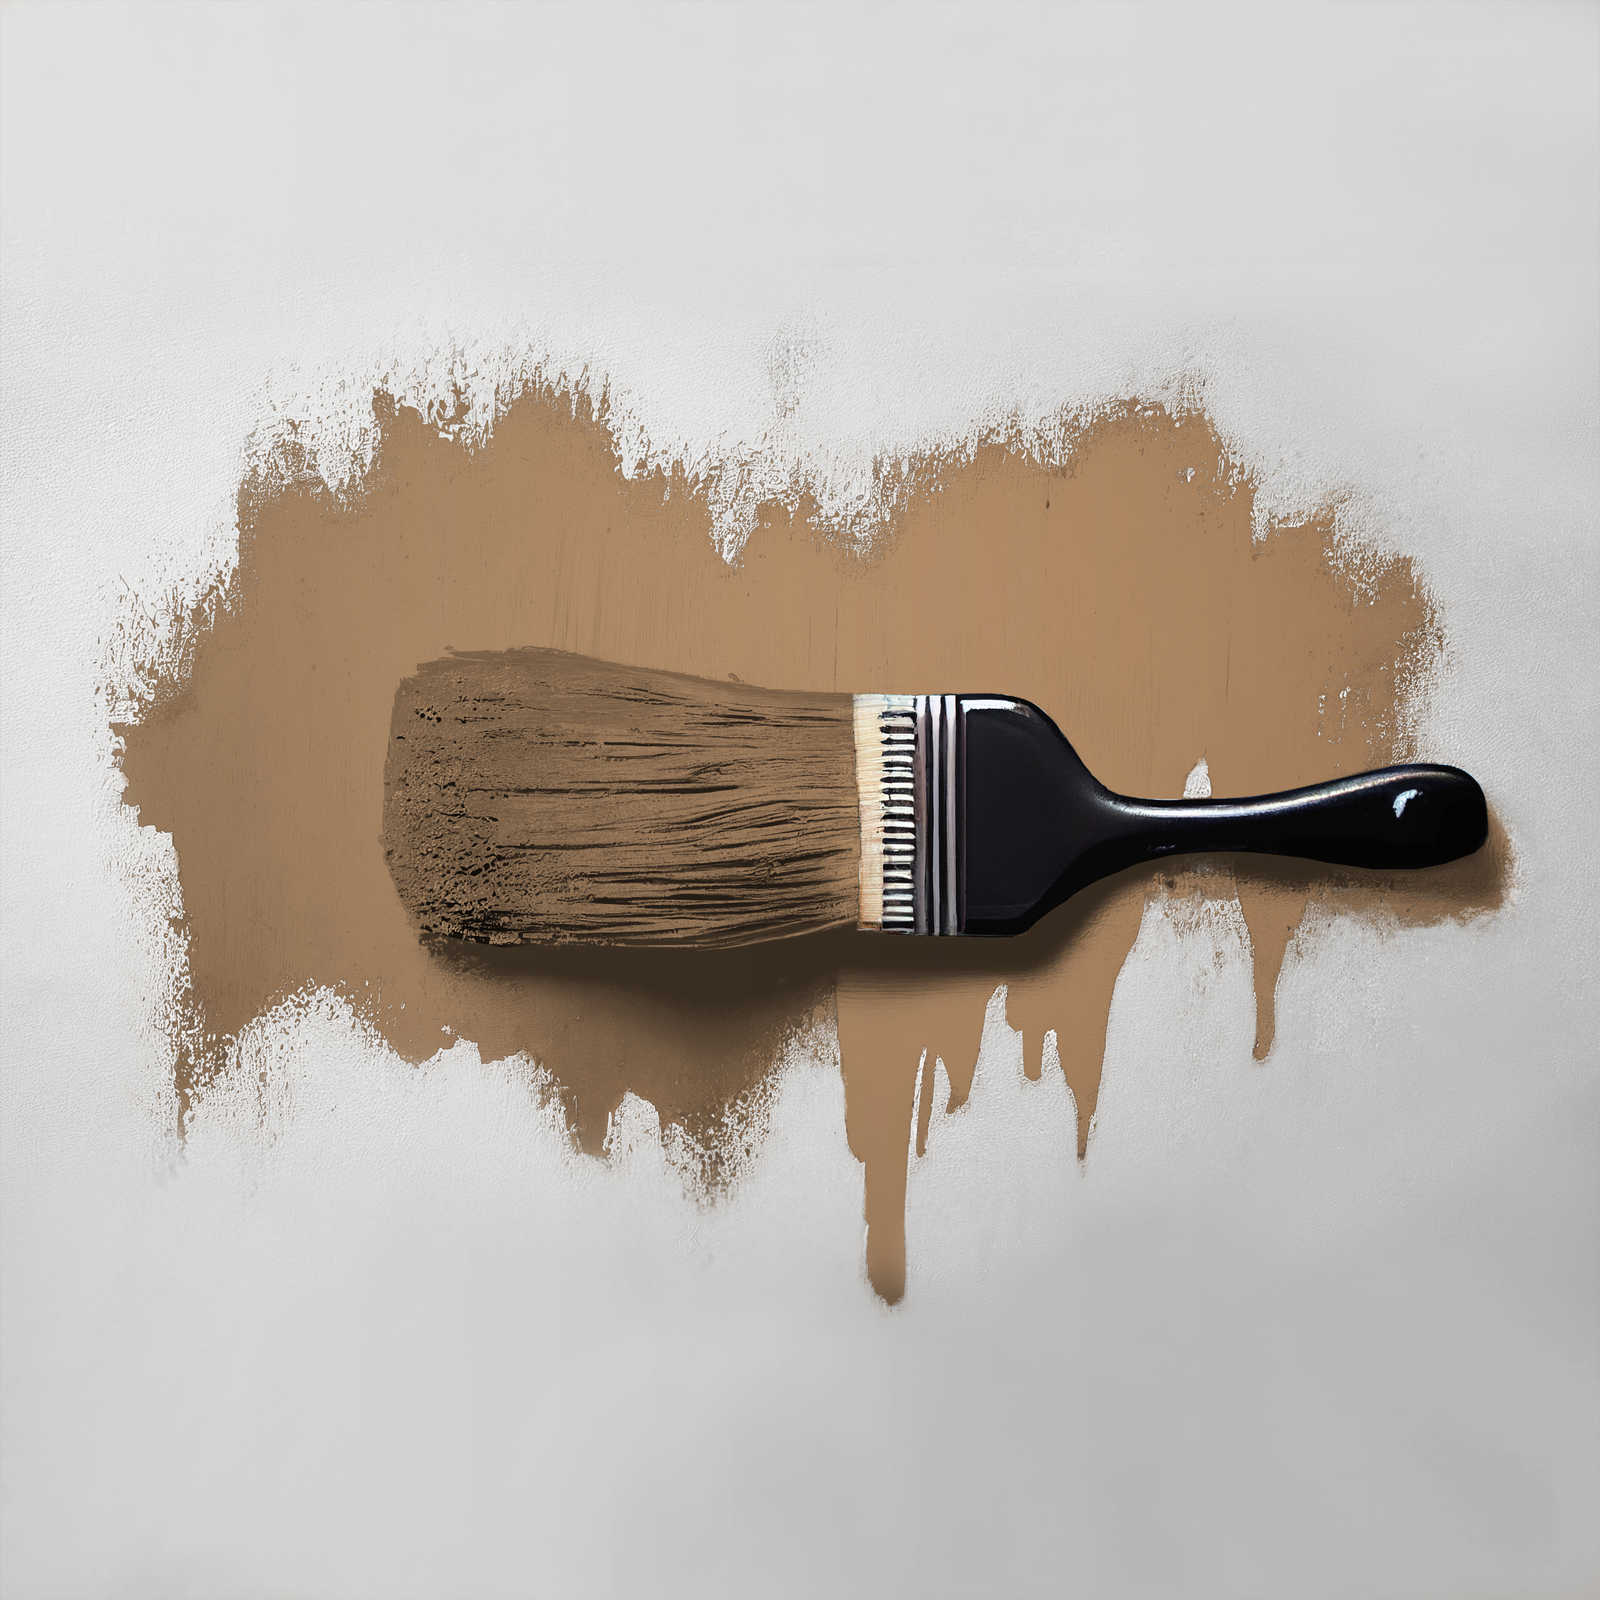             Wall Paint TCK6006 »Certain Cinnamon« in strong golden brown – 5.0 litre
        